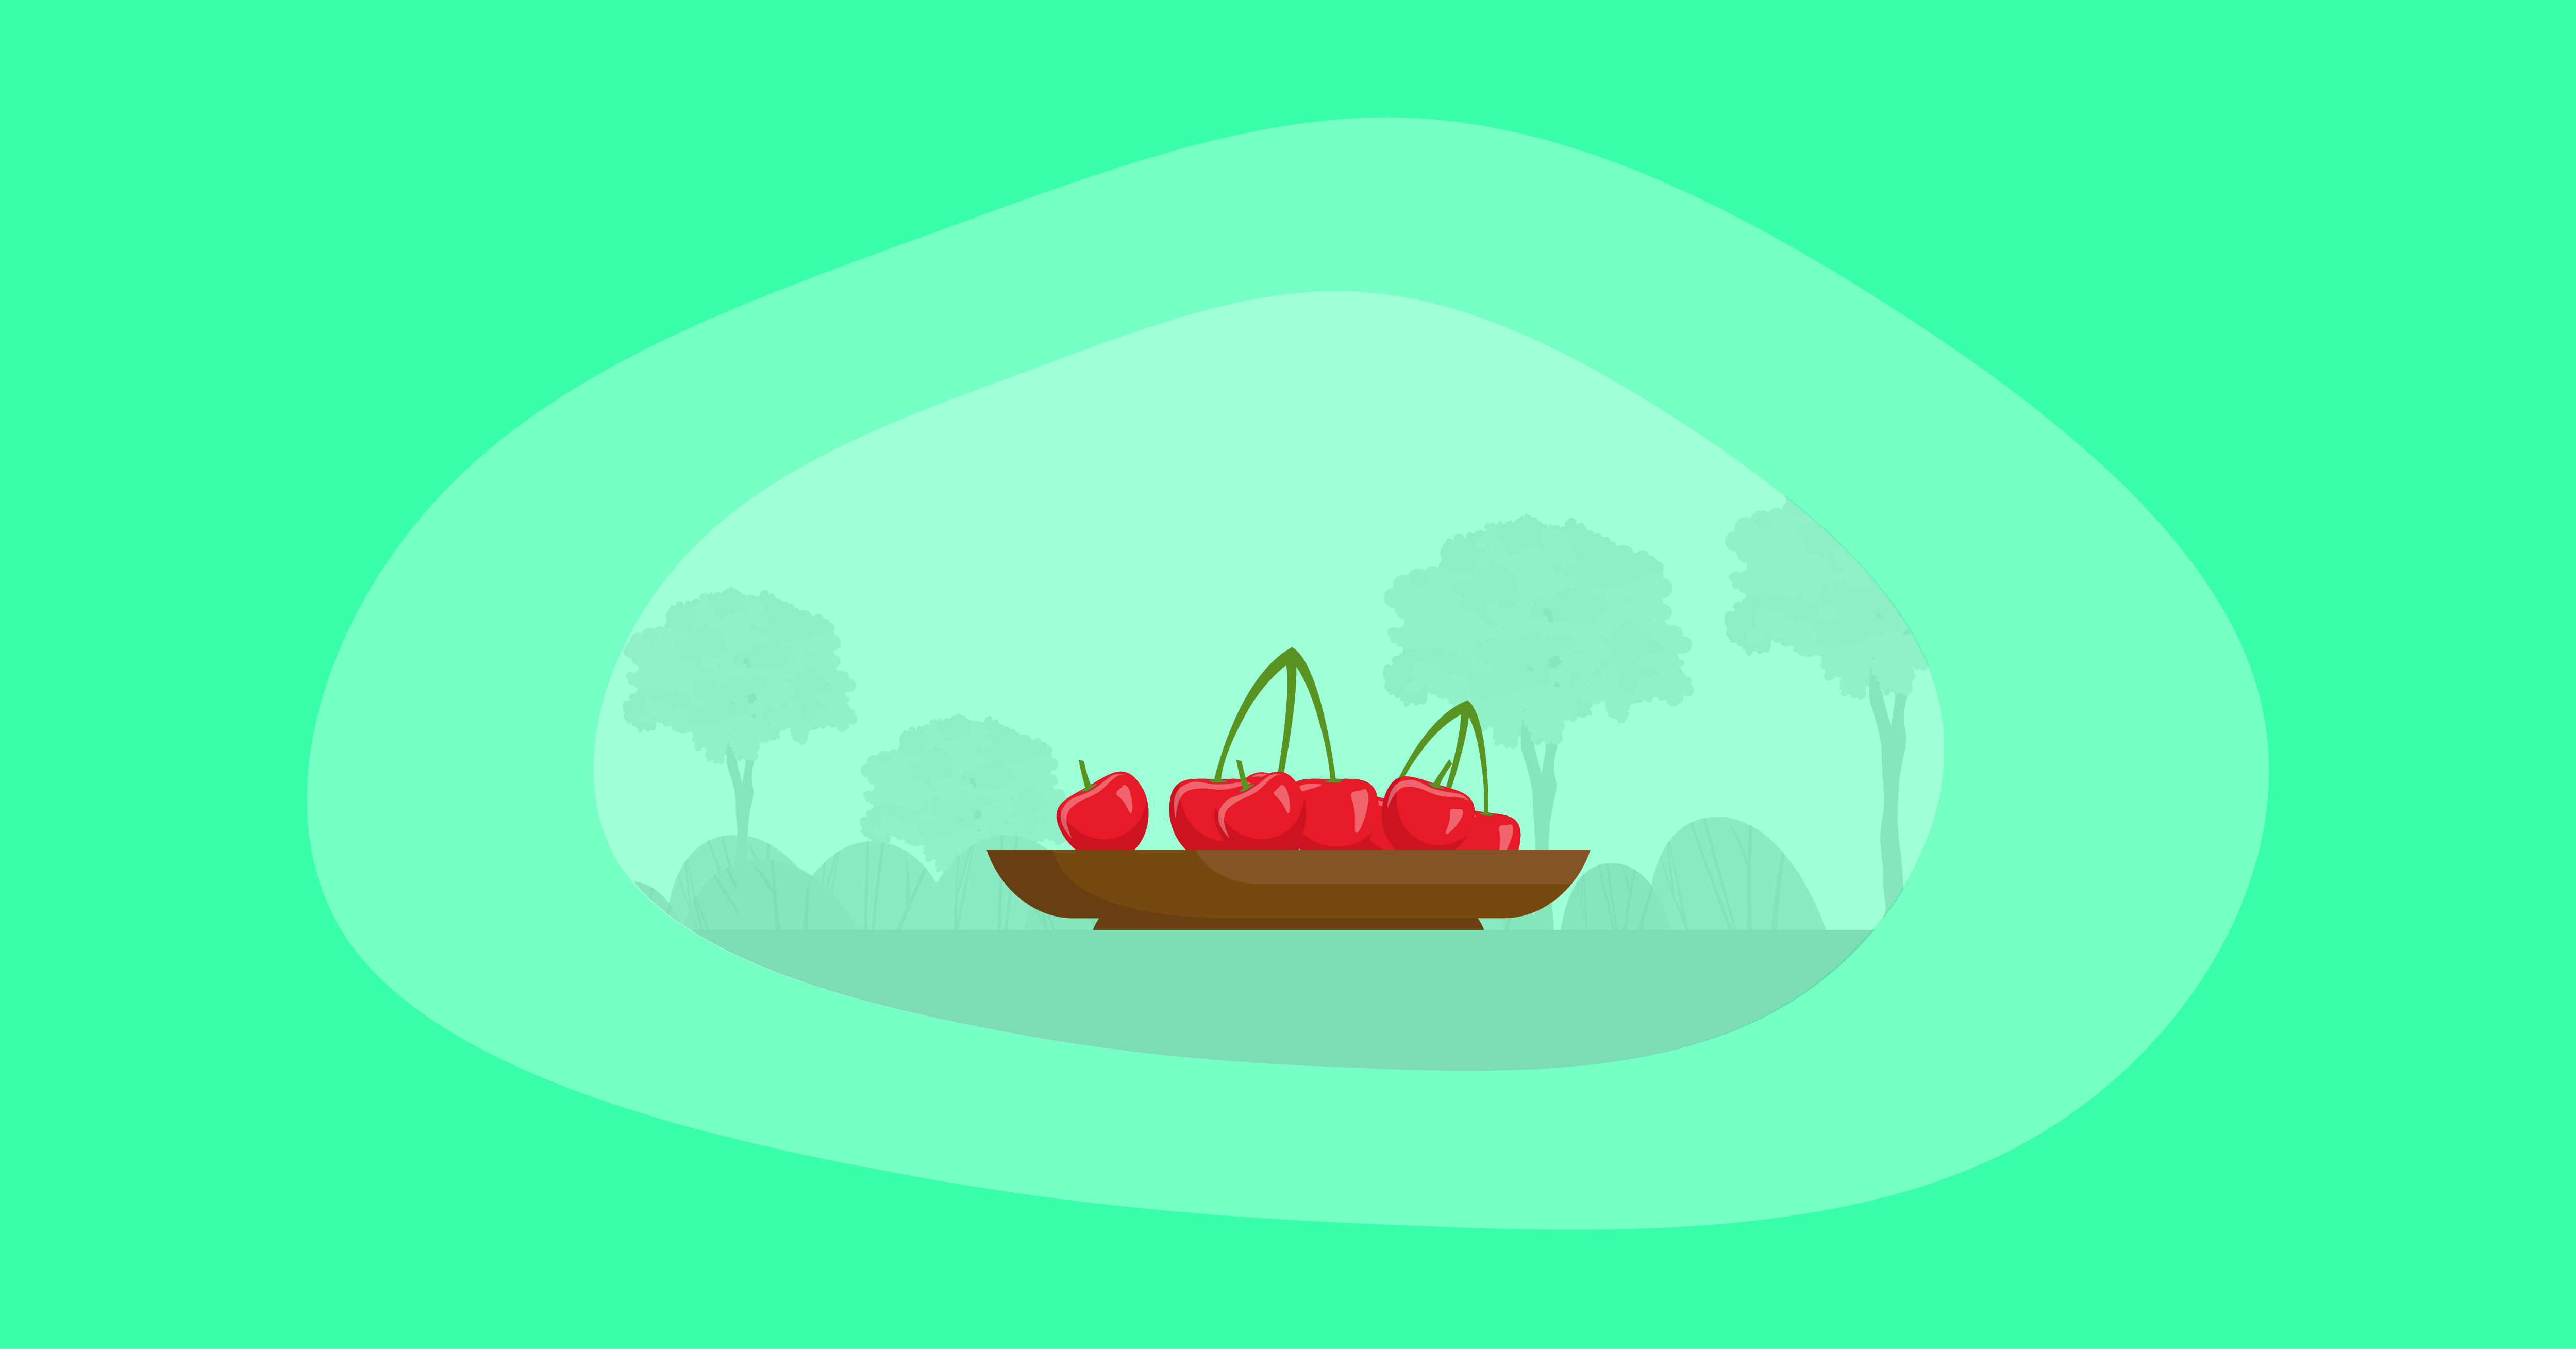 Illustration of cherries in a wooden platter